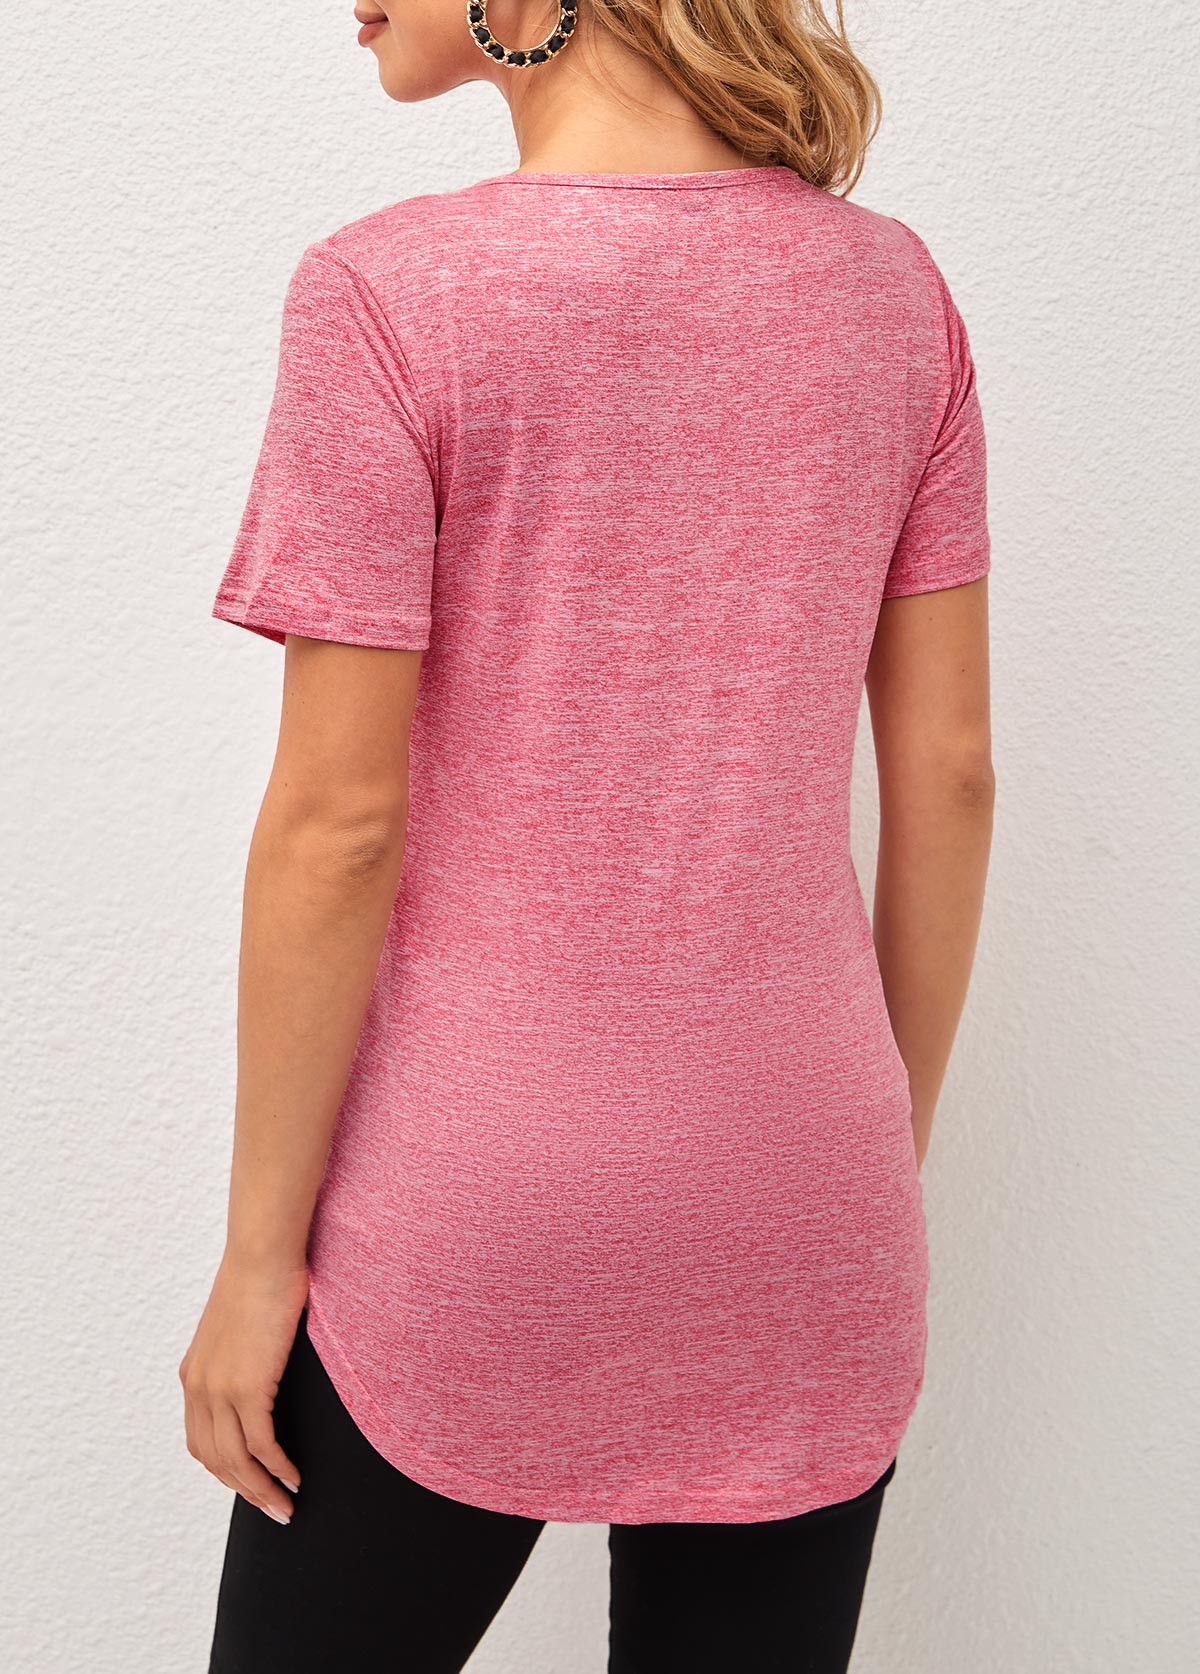 Tassel Detail Short Sleeve V Neck Pink T Shirt